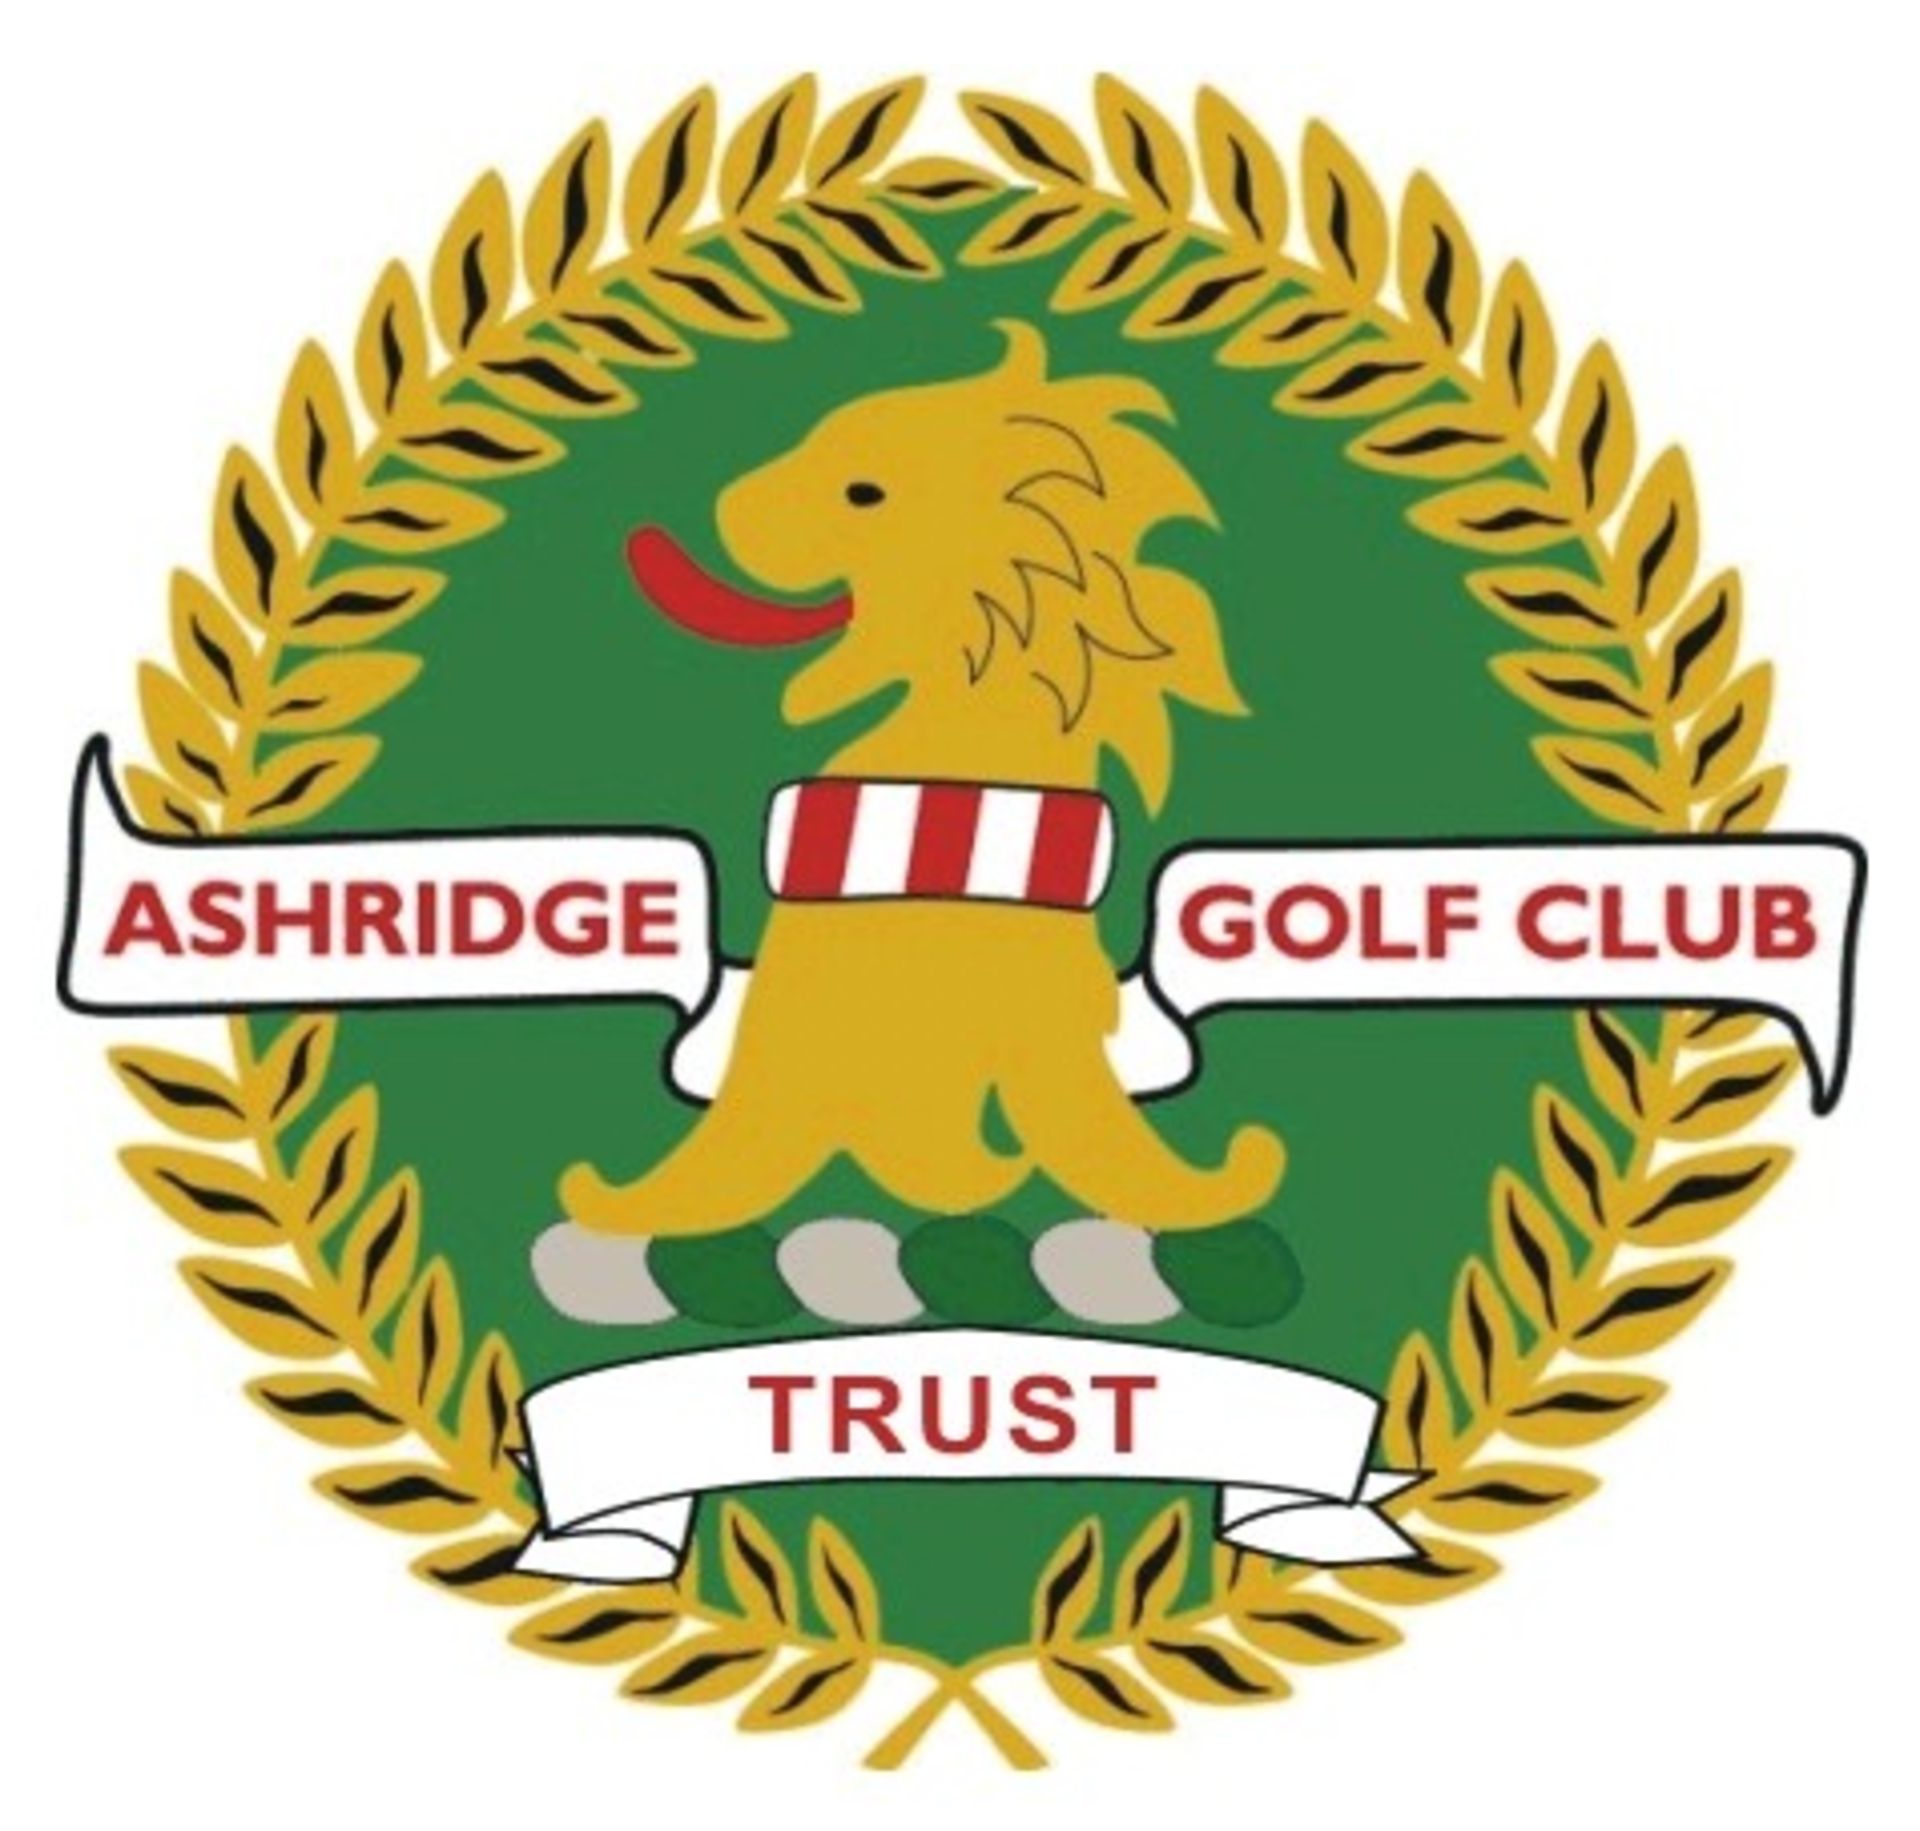 18 hole Four ball round of golf at the Ashridge Golf Club see http://www.ashridgegolfclub.ltd.uk/